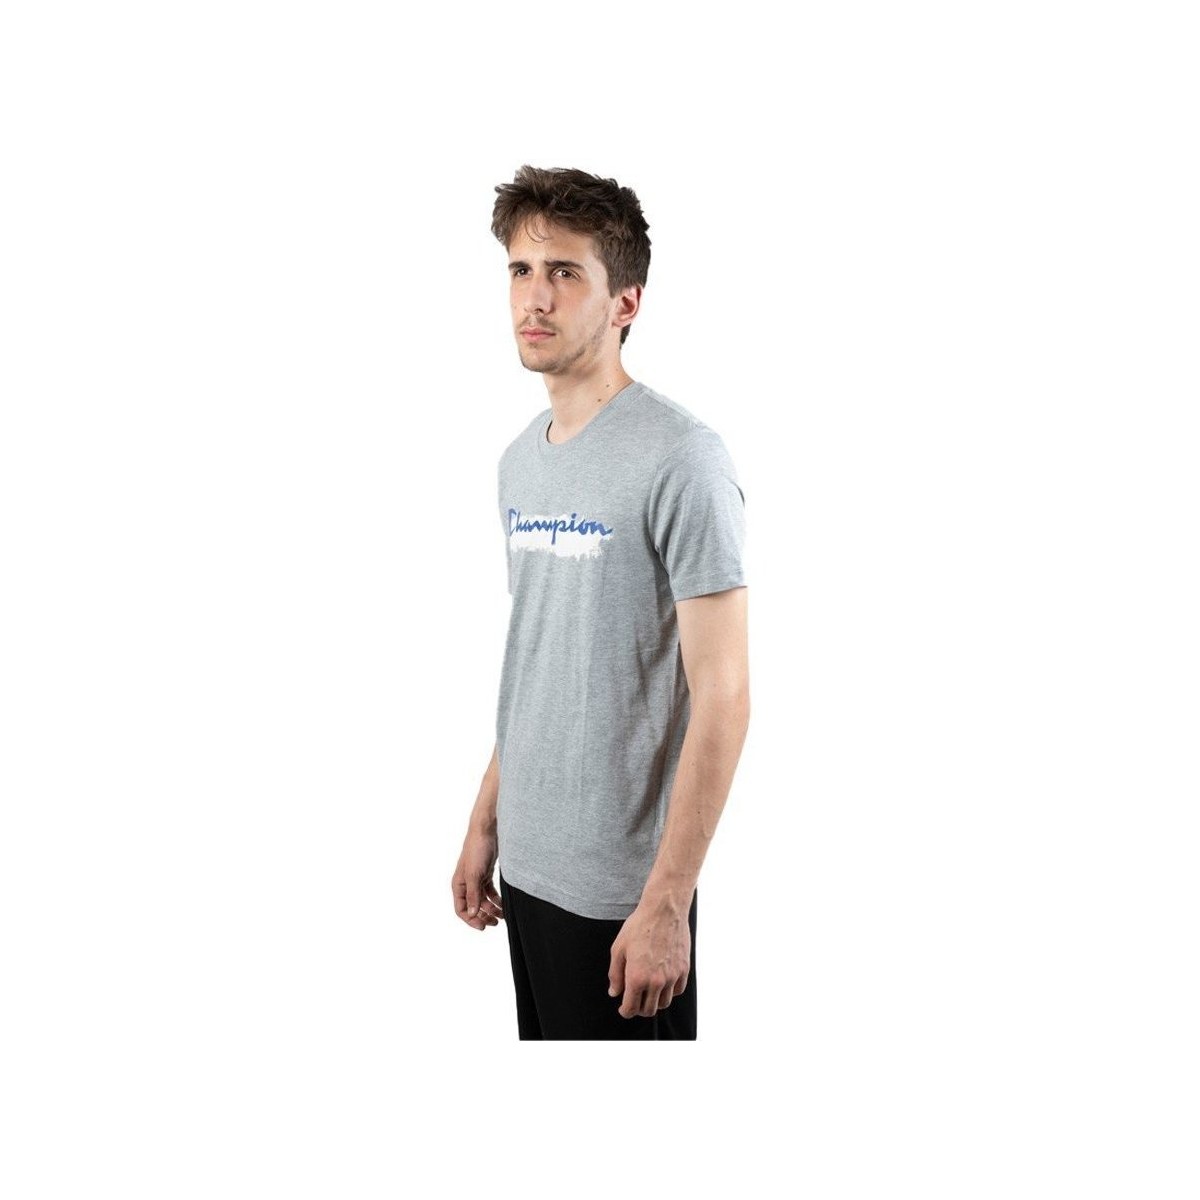 Abbigliamento Uomo T-shirt maniche corte Champion T-Shirt Uomo Indigo Grigio